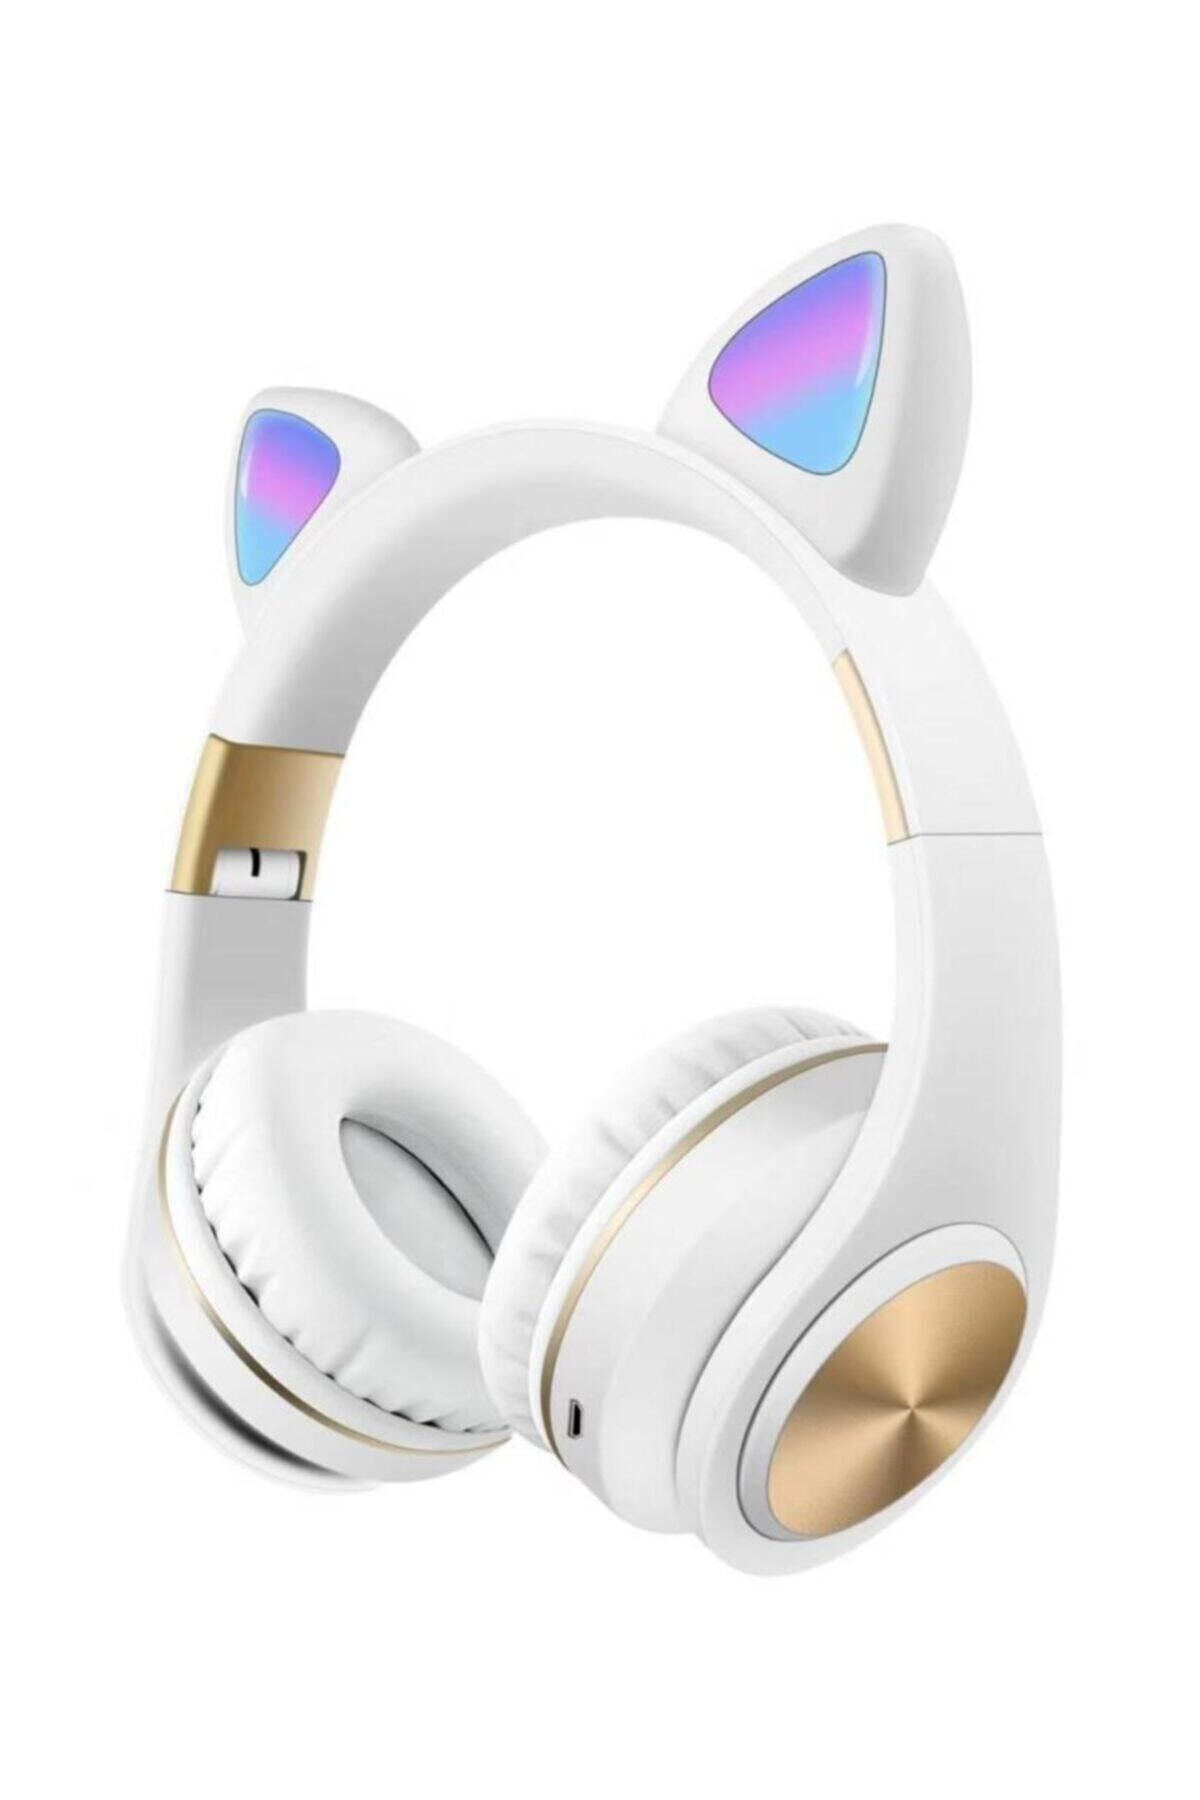 Wireless m1. Беспроводные наушники Cat Ear. Беспроводные наушники Cat Ear Headphones. Детские беспроводные наушники led Cat Ear BK-28m. Беспроводные наушники Cat Ear Fashion m2 с led подсветкой.